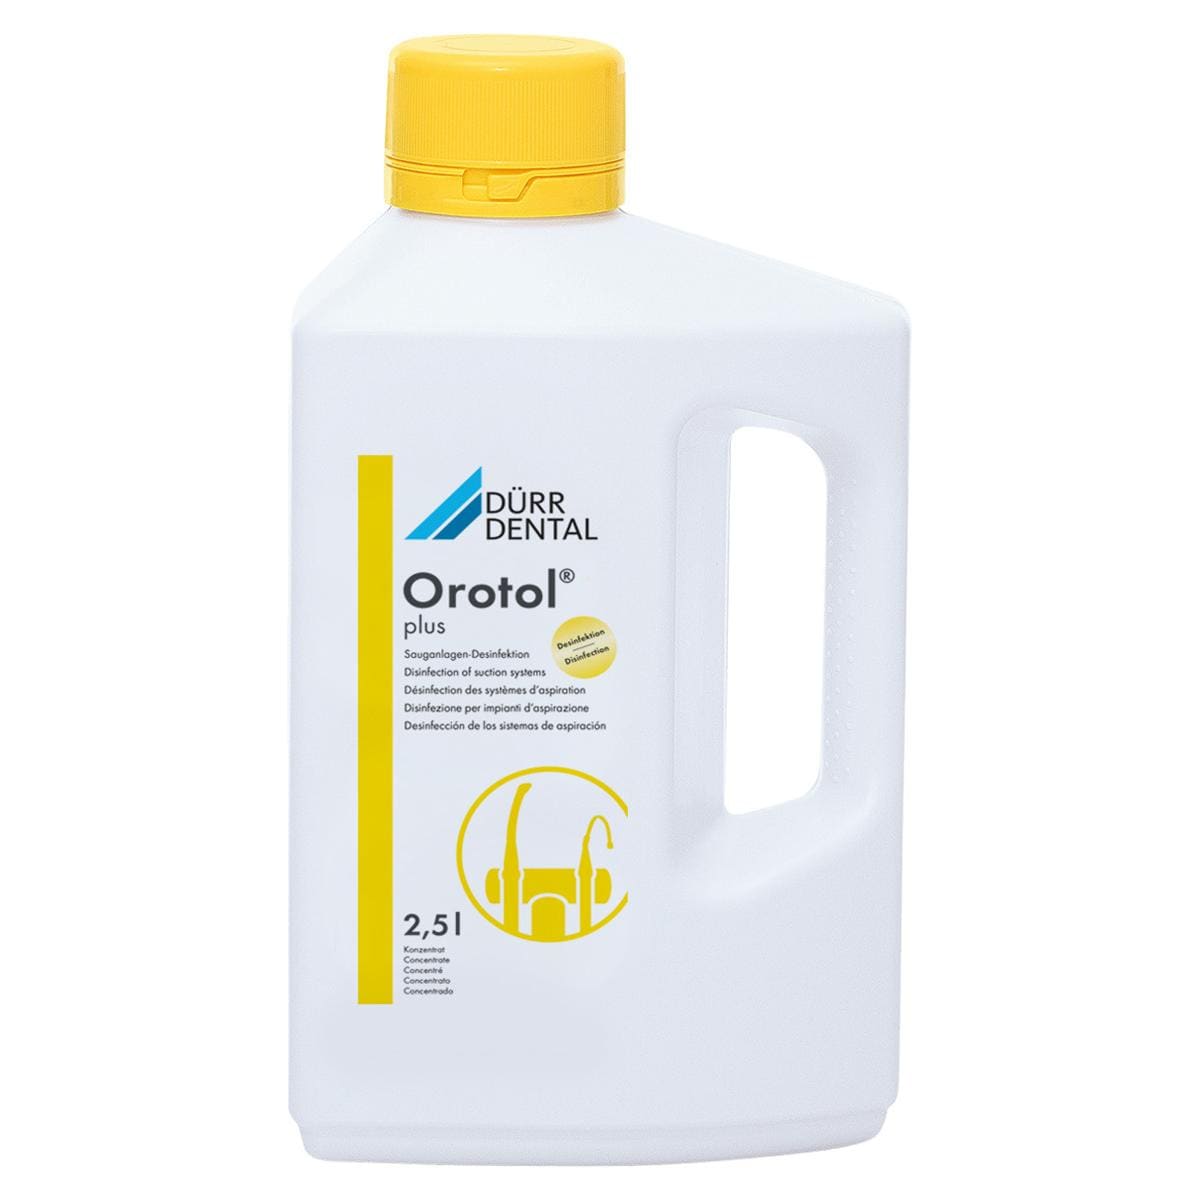 Orotol plus - Flacon 2,5 liter